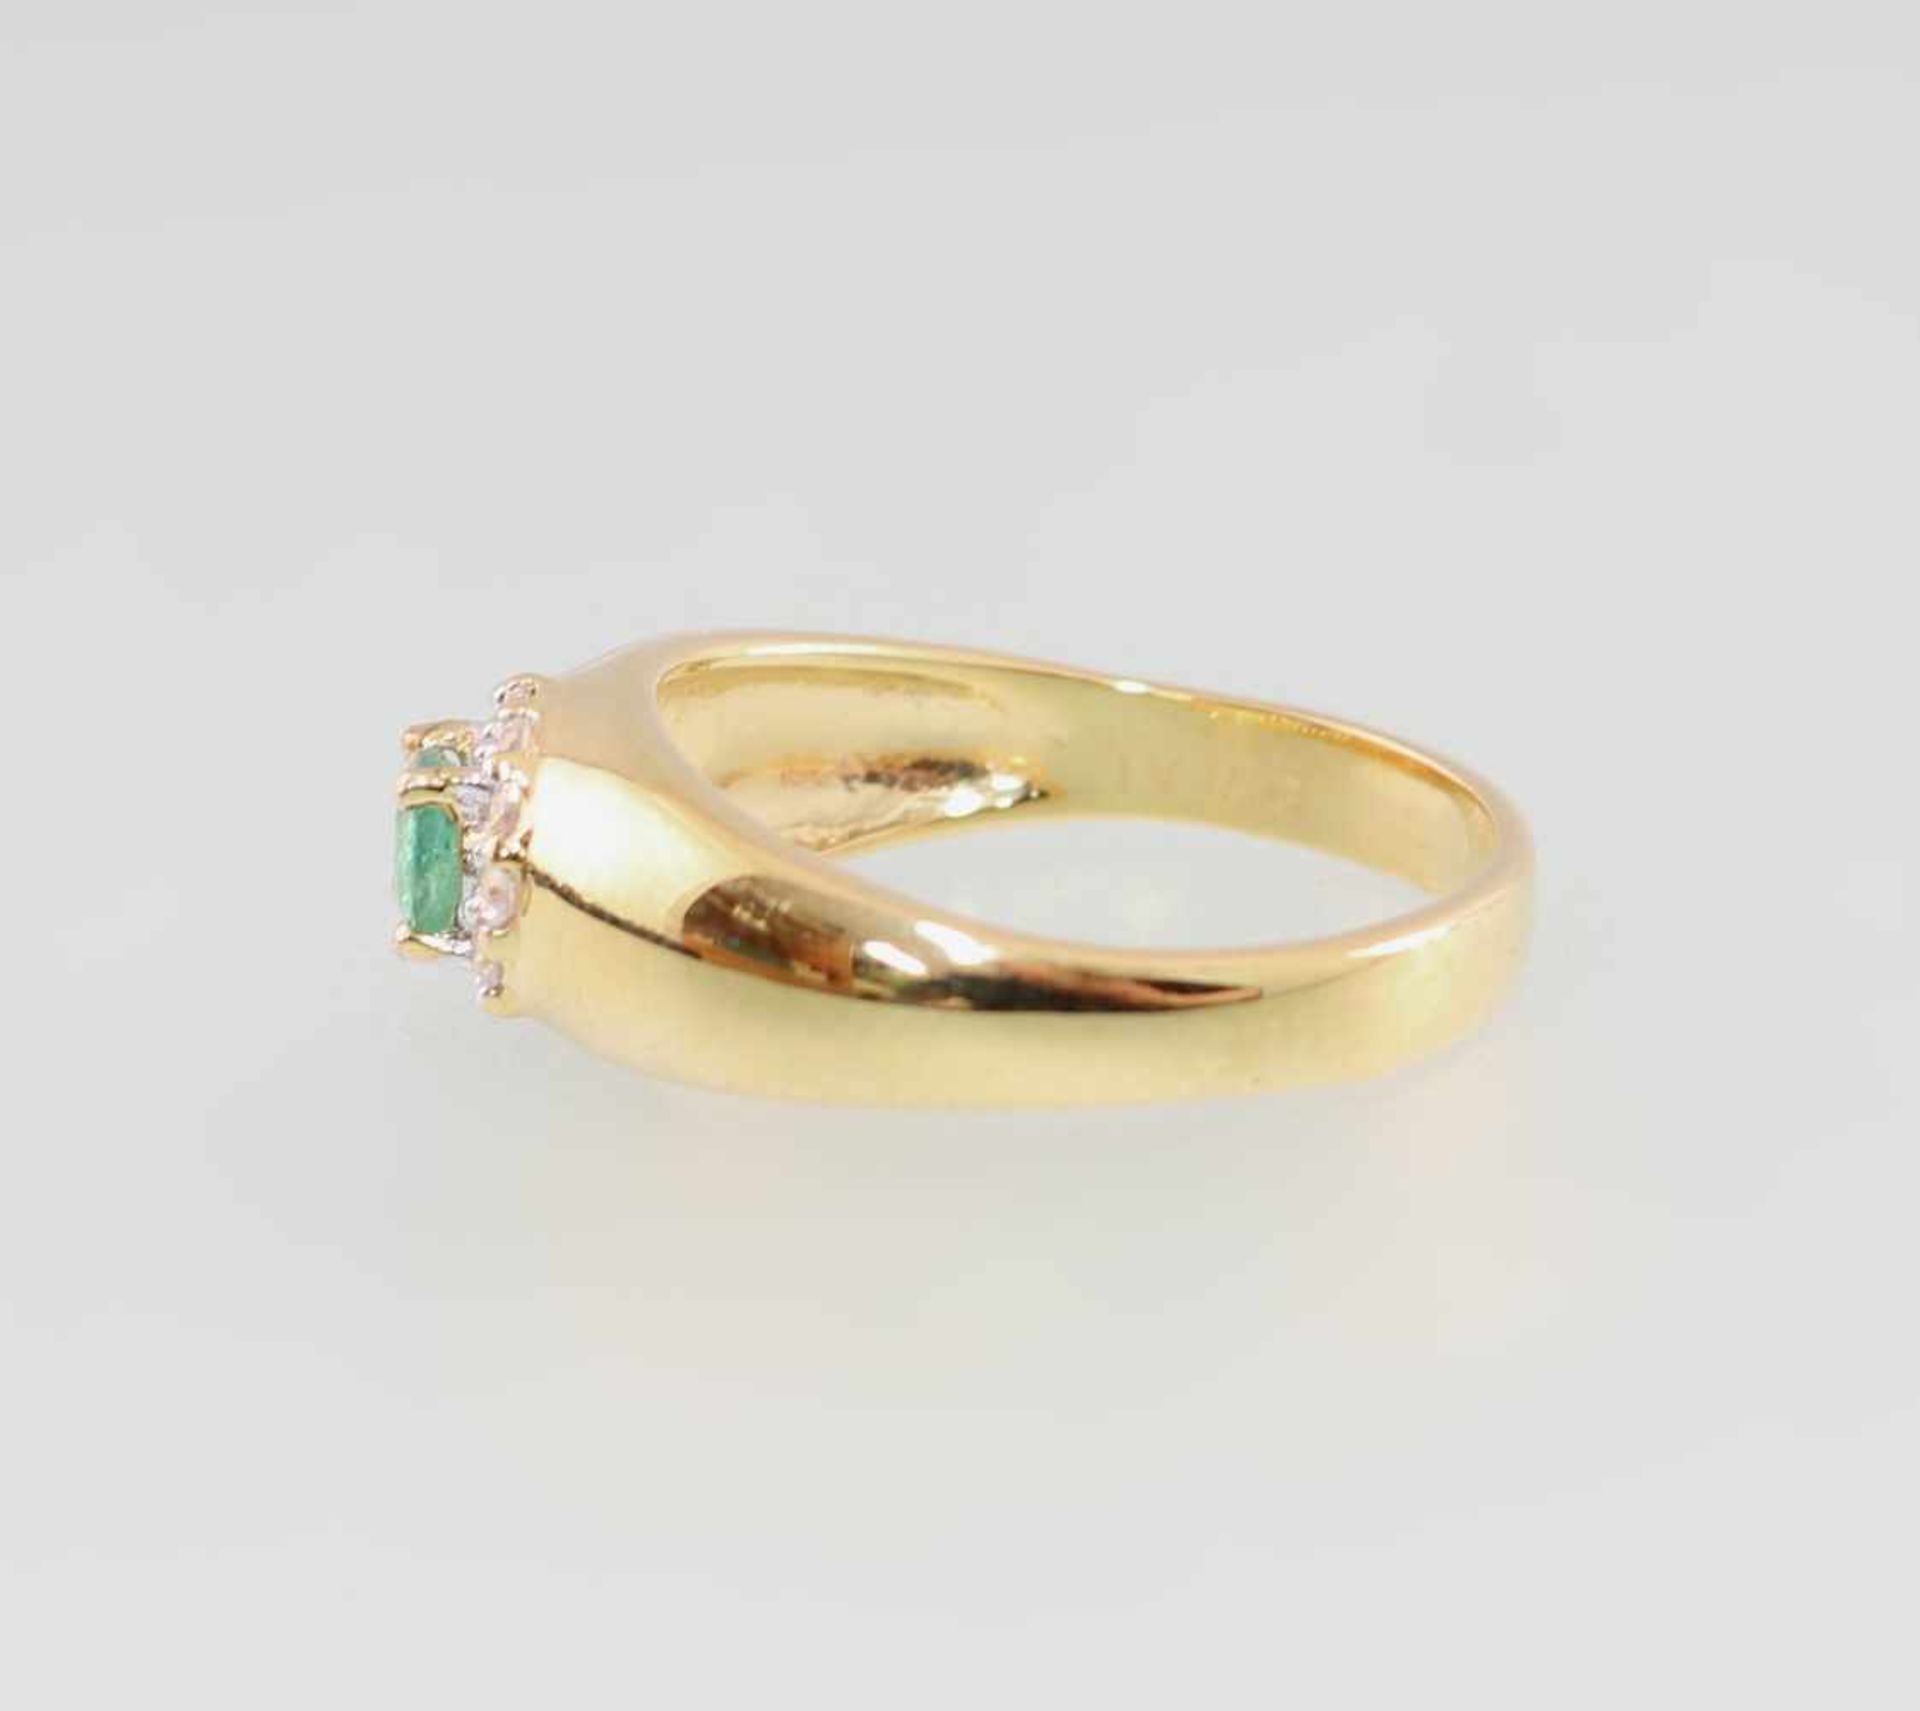 Smaragd-Topas-Ring925er Silber, vergoldet, 3,59g, an konischer Ringschine krappengefasster, oval- - Bild 3 aus 5